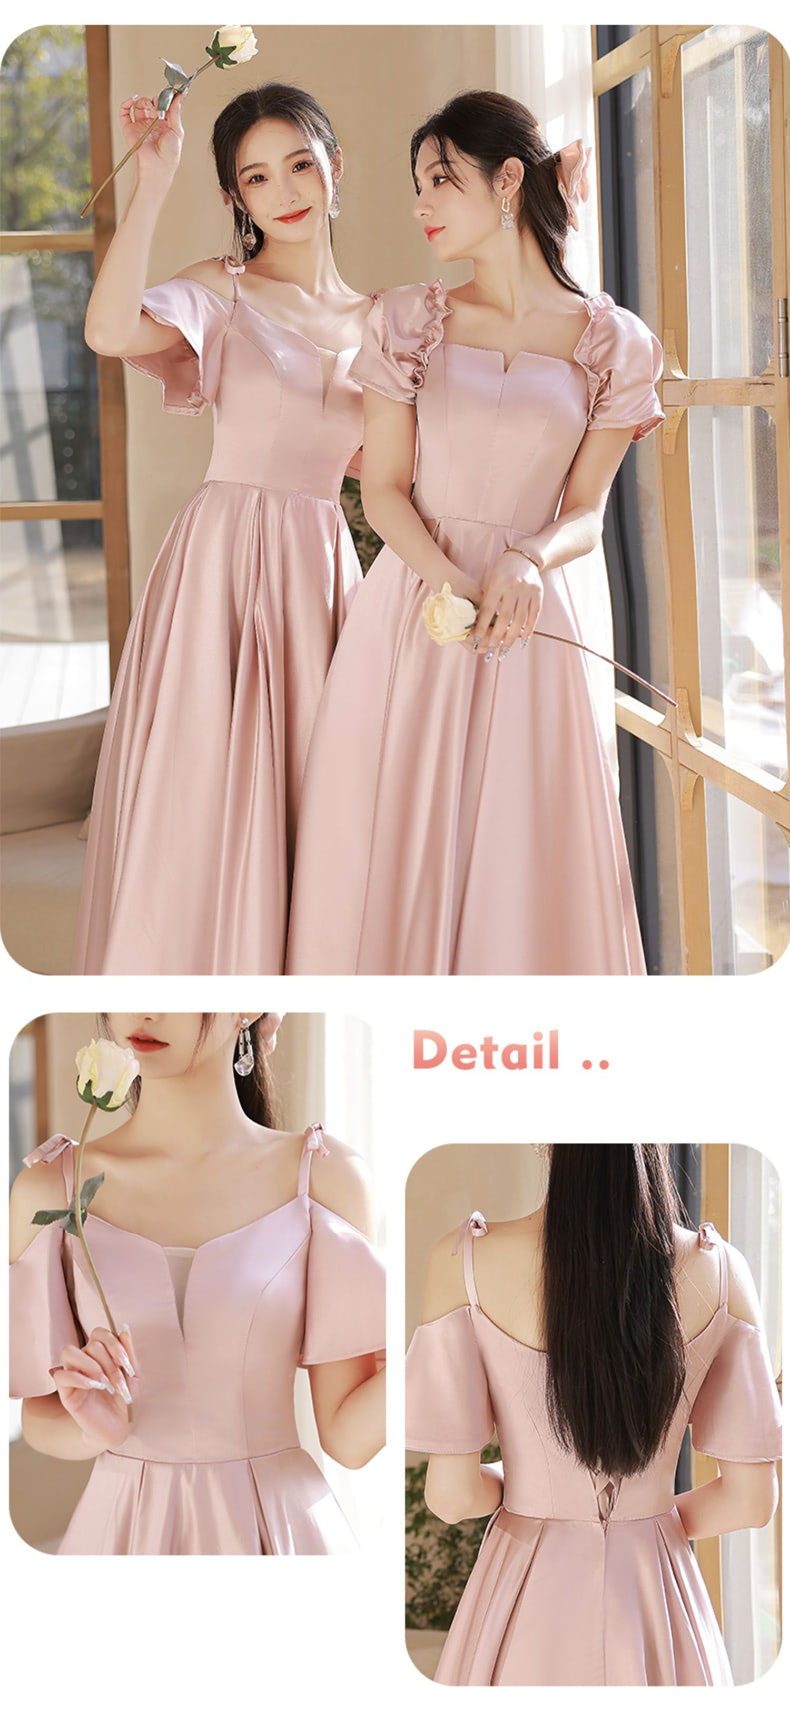 Simple-Pink-Satin-Prom-Evening-Homecoming-Bridesmaid-Dress22.jpg